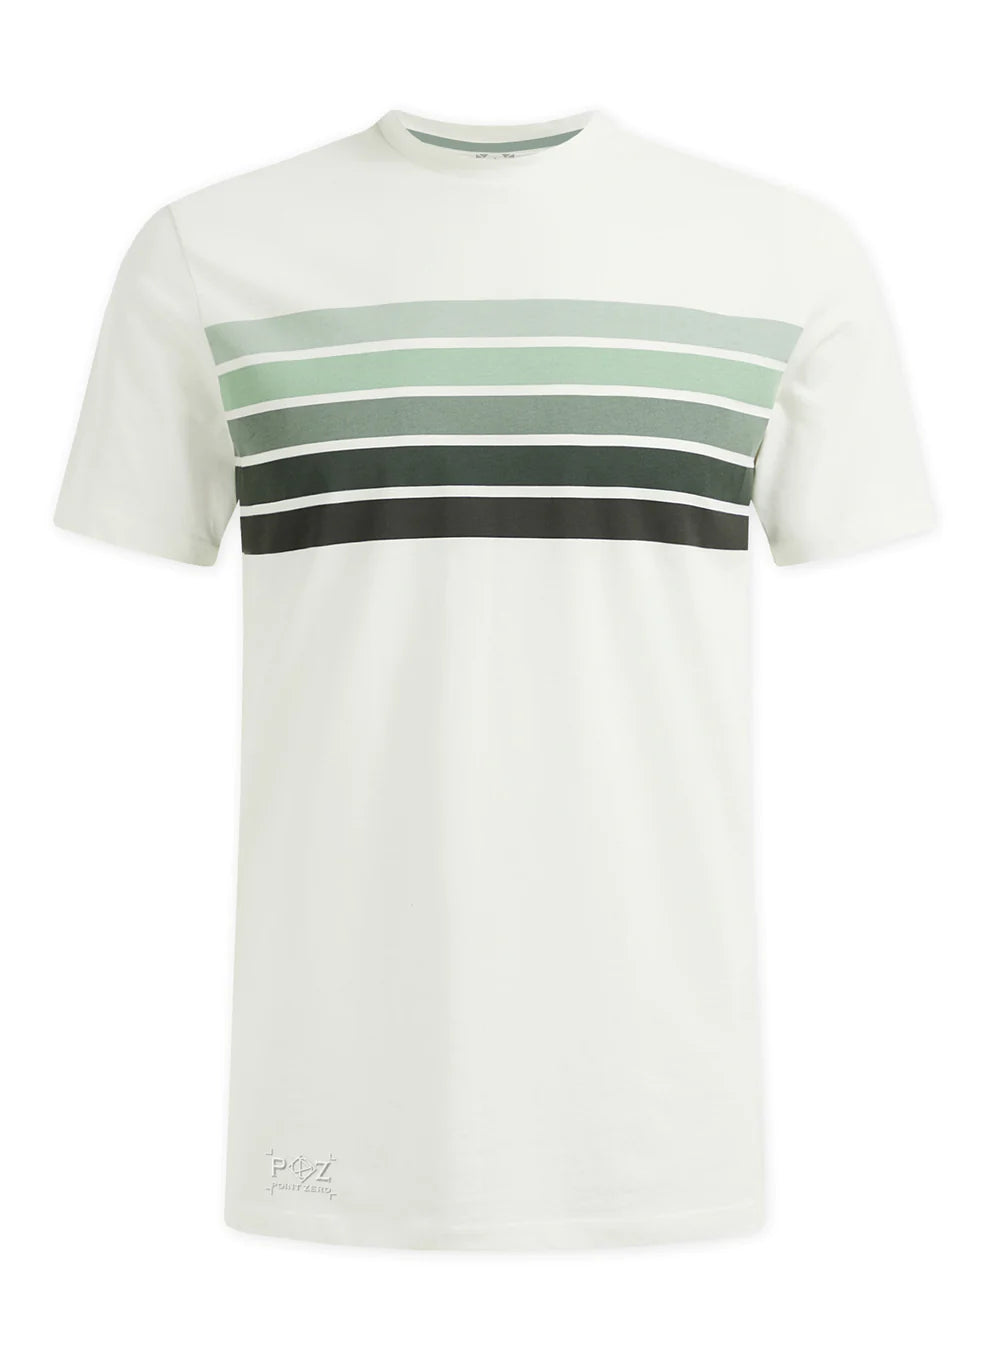 TARY T-shirt semi-fit imprimé rayures - Mint